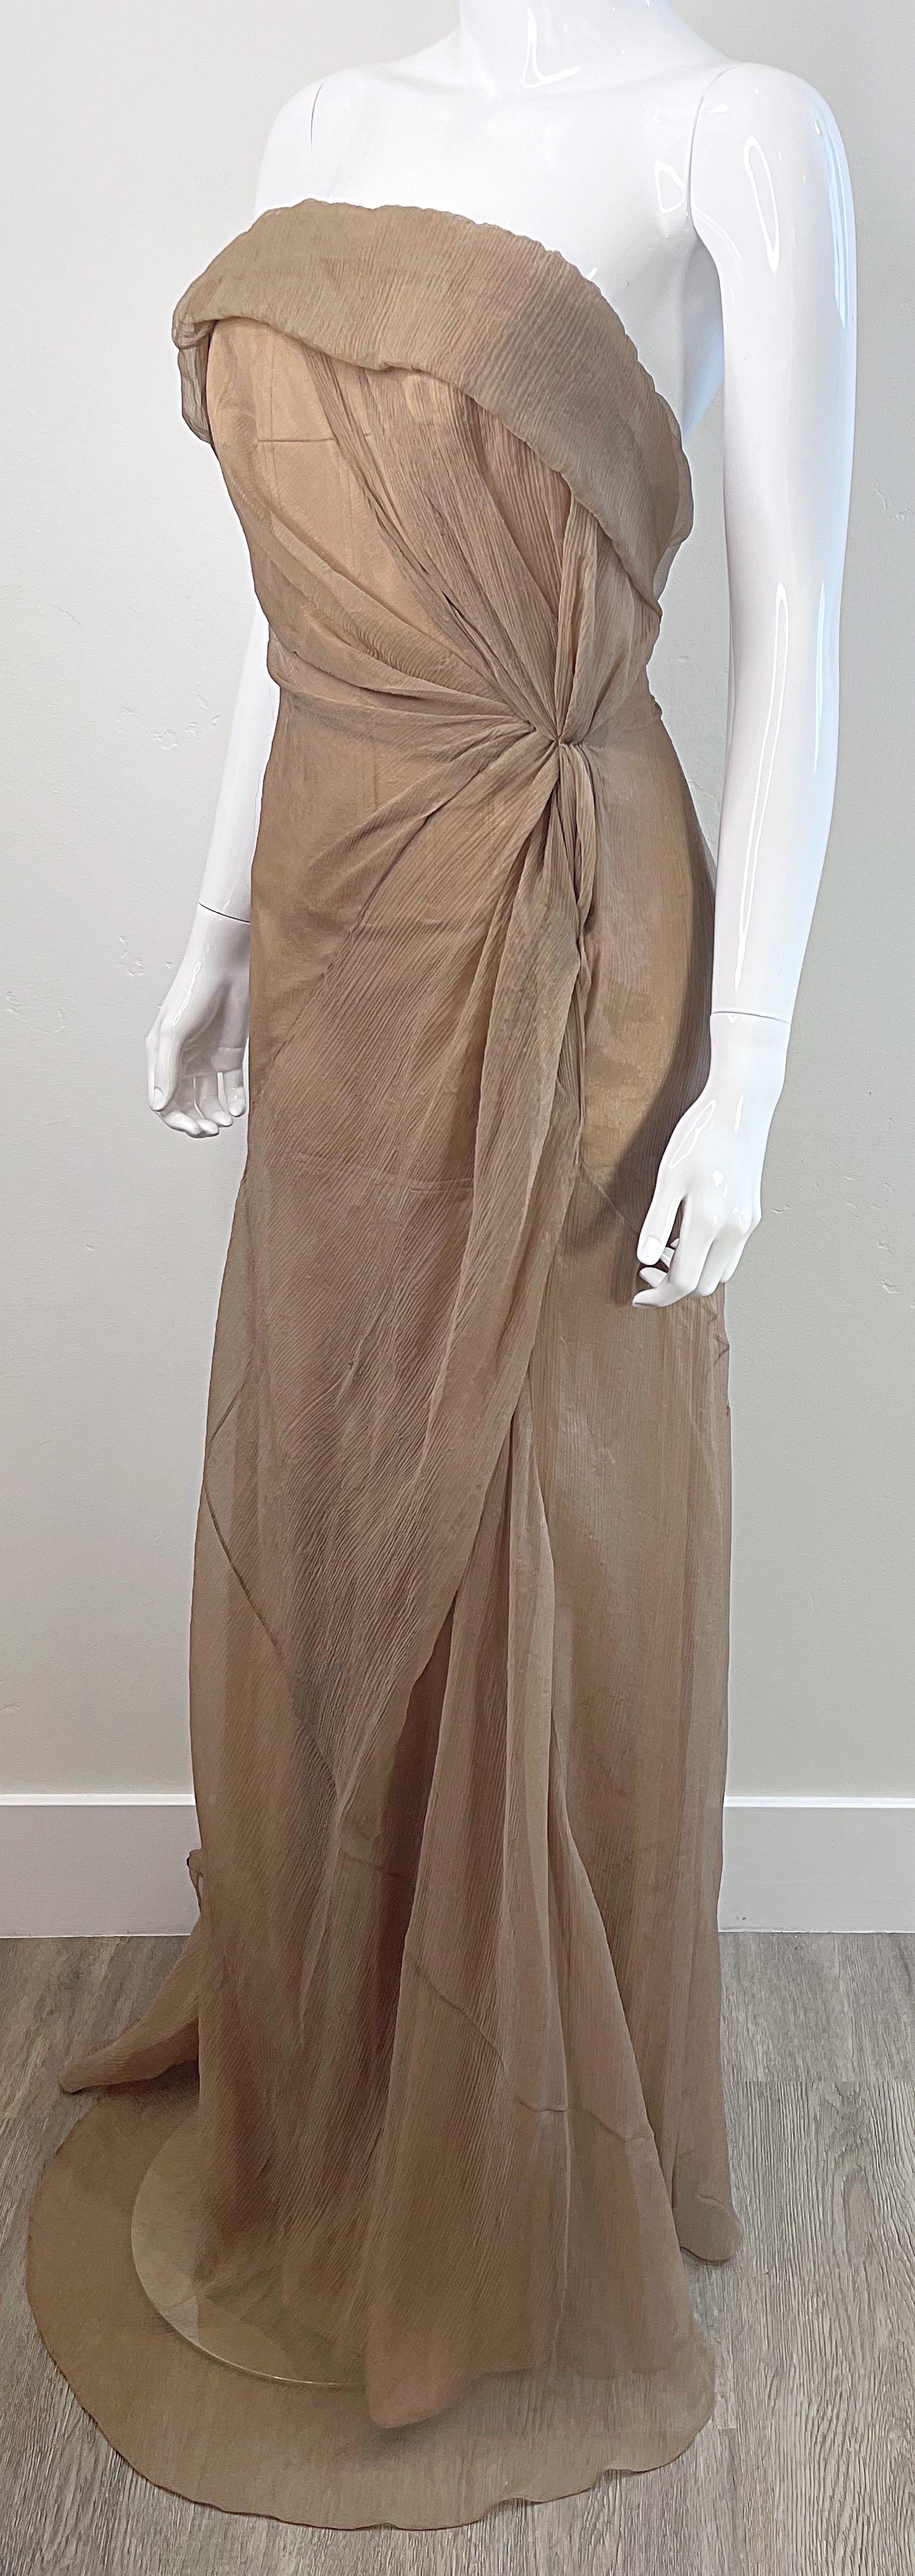 NWT Donna Karan Fall 2011 Runway Silk Organza Size 4 / 6 Nude Gold Gown Dress For Sale 2